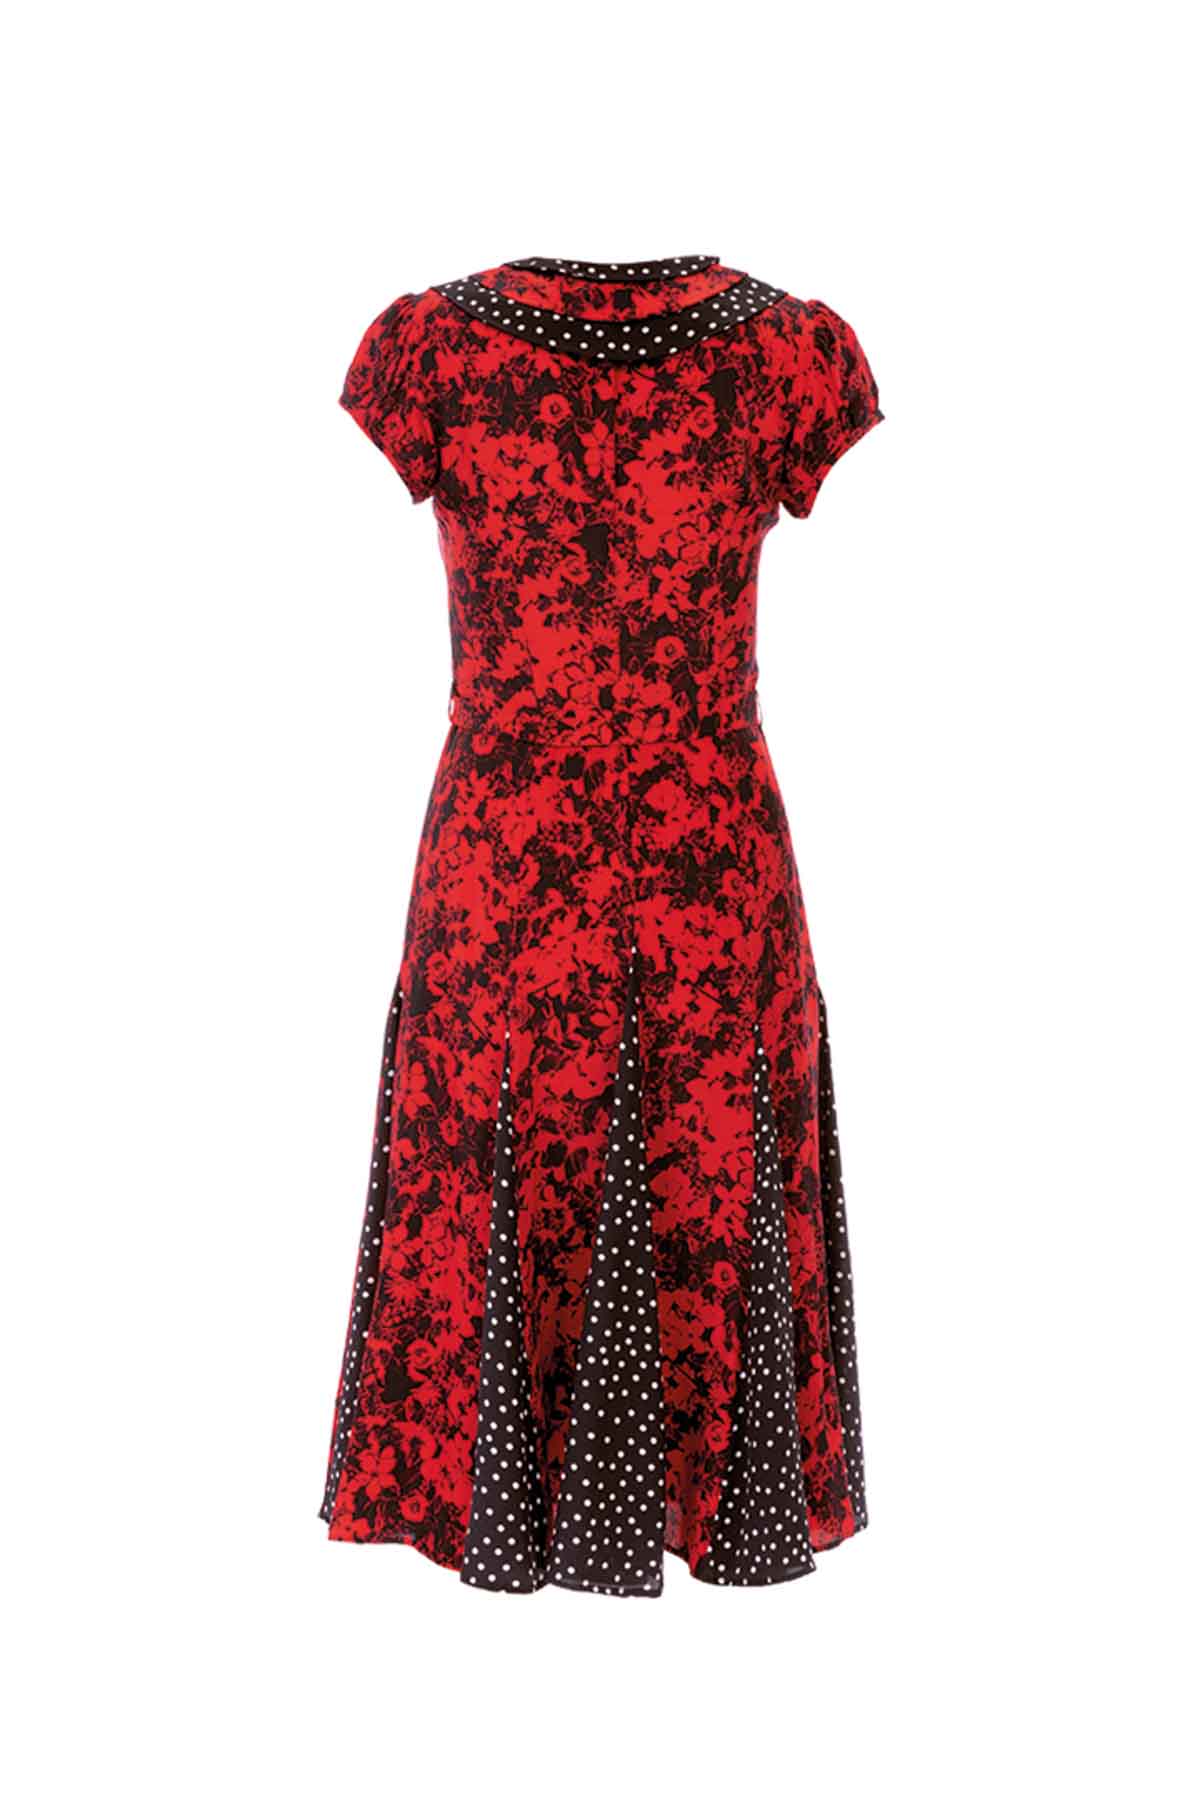 Tri Collar Silk Dress - Red Floral